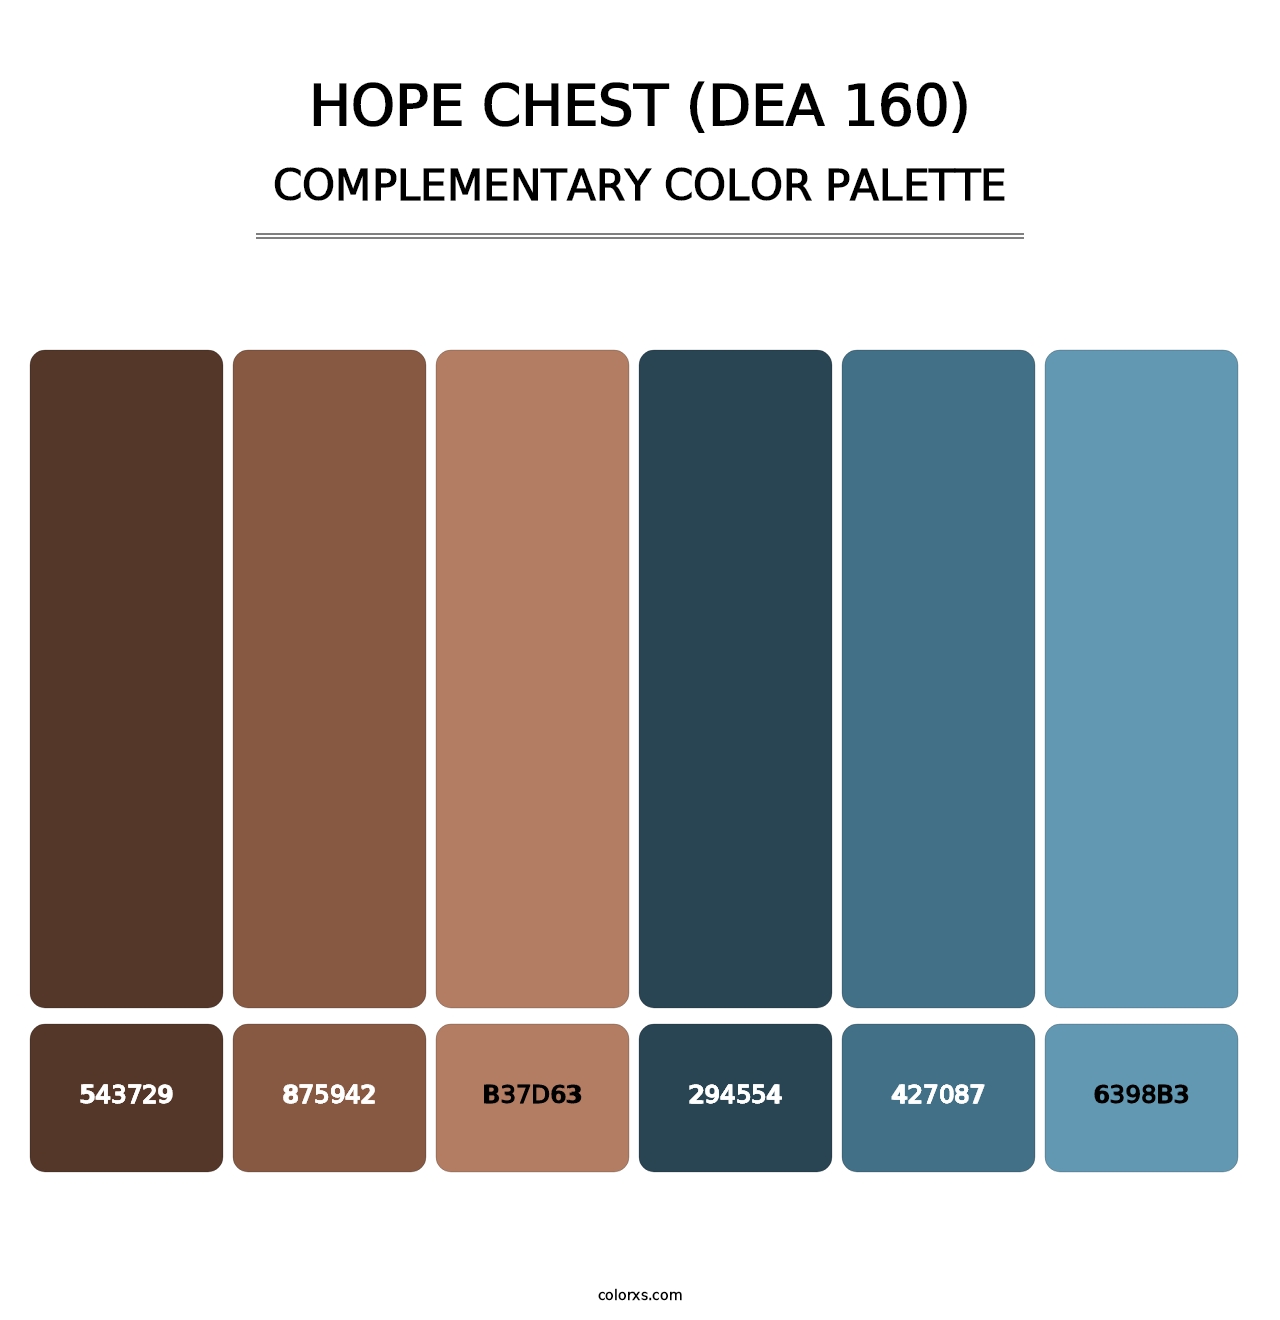 Hope Chest (DEA 160) - Complementary Color Palette